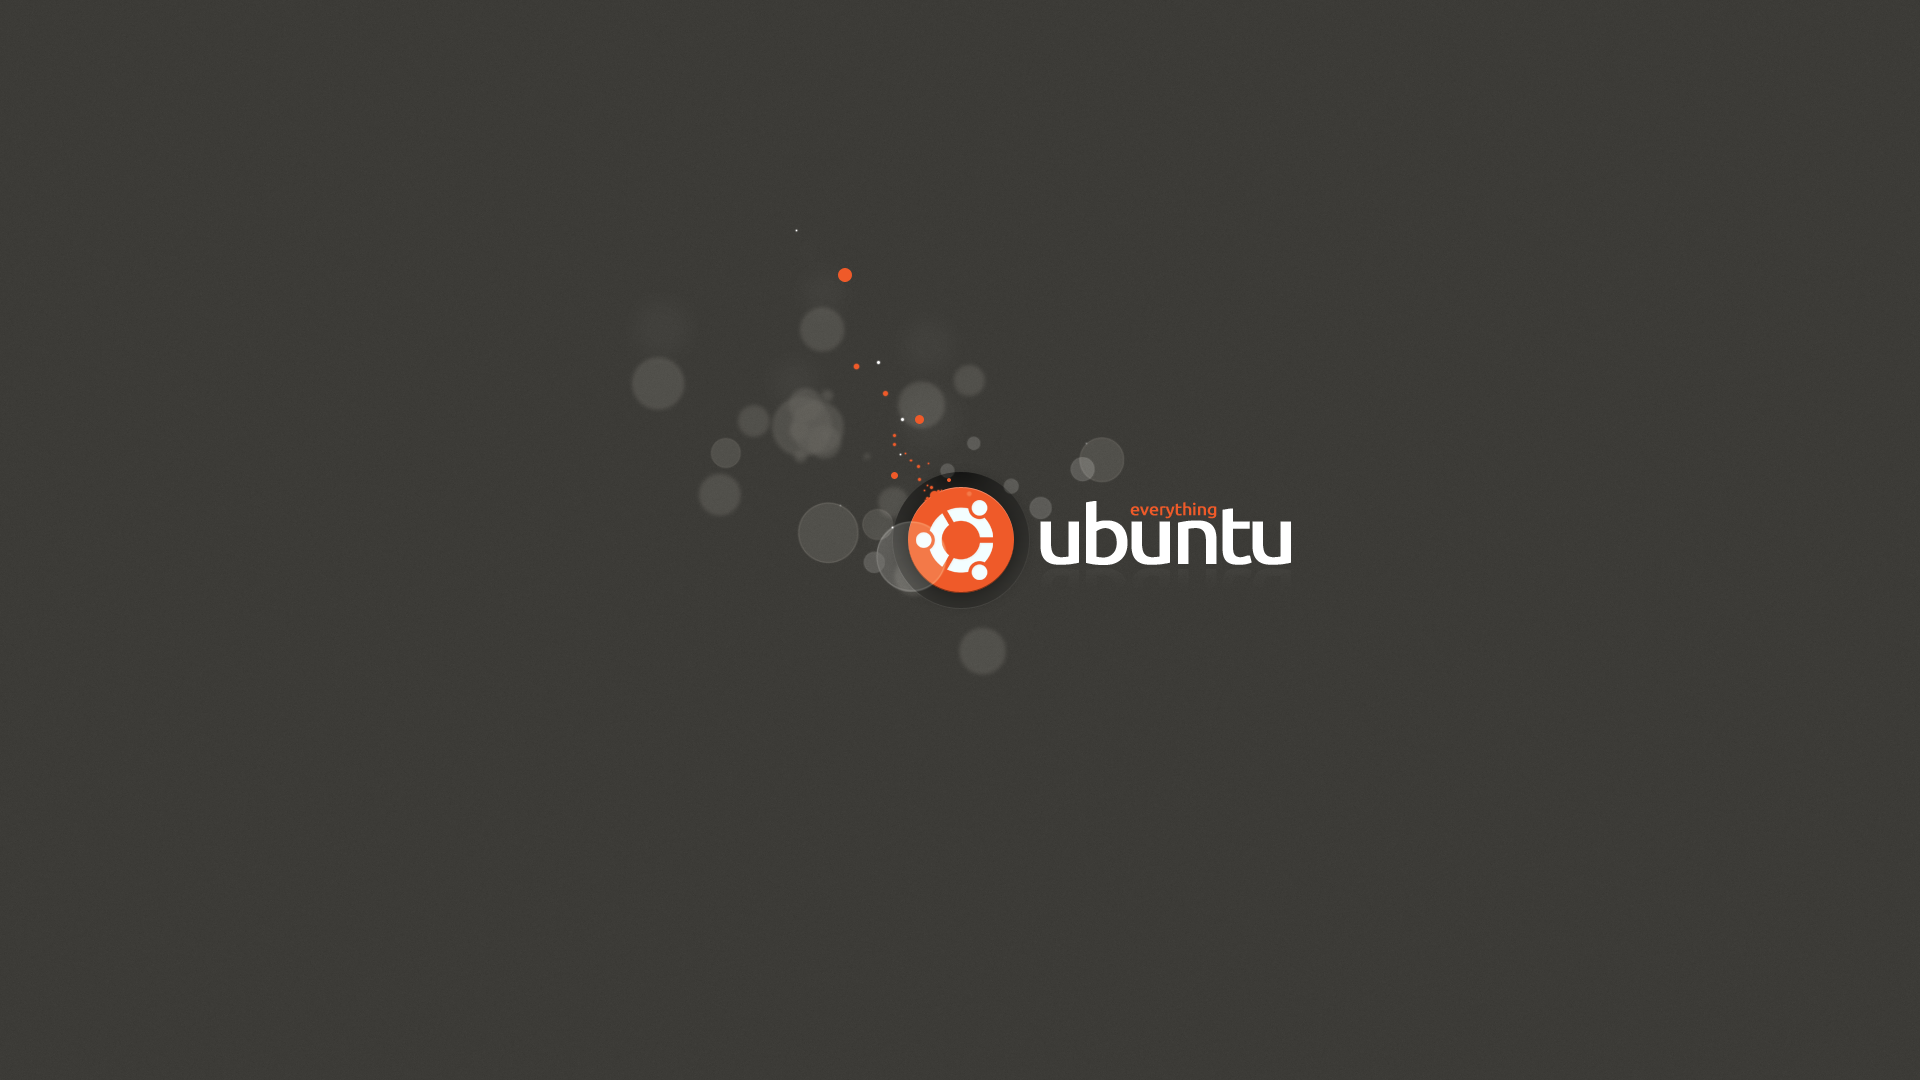 Ubuntu Wallpaper Best